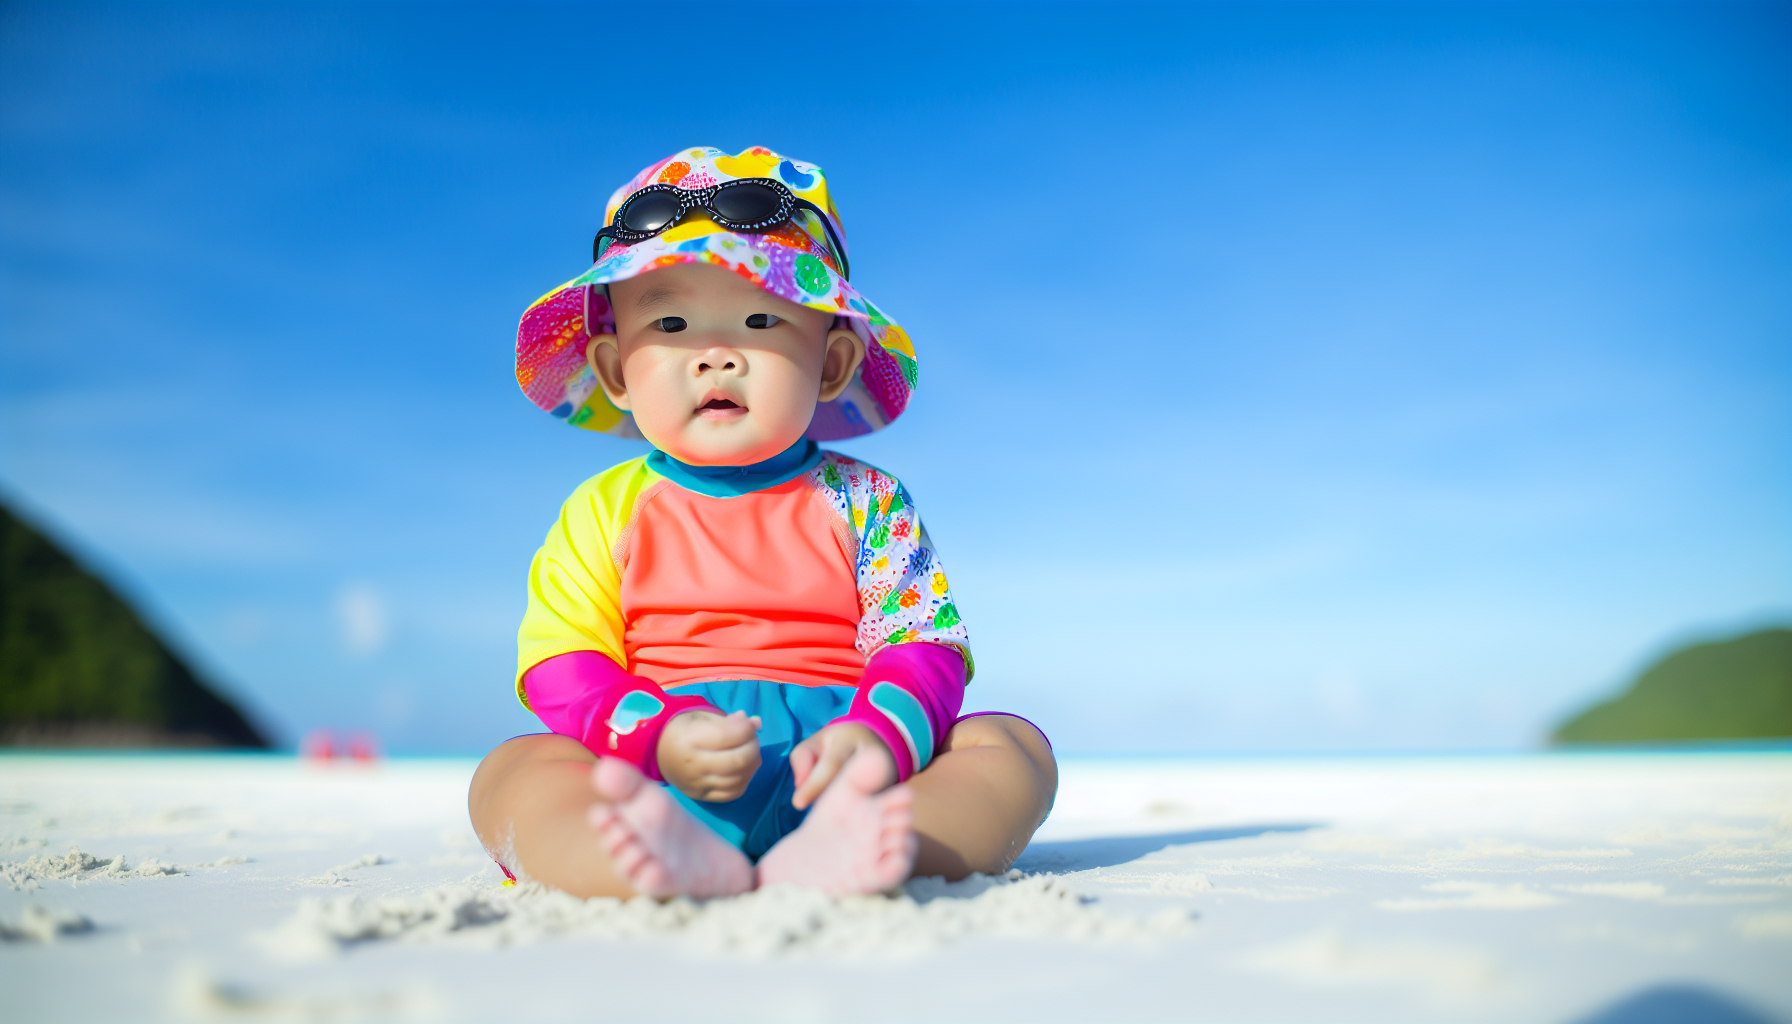 Baby wearing a rash guard, sun hat, and sunglasses